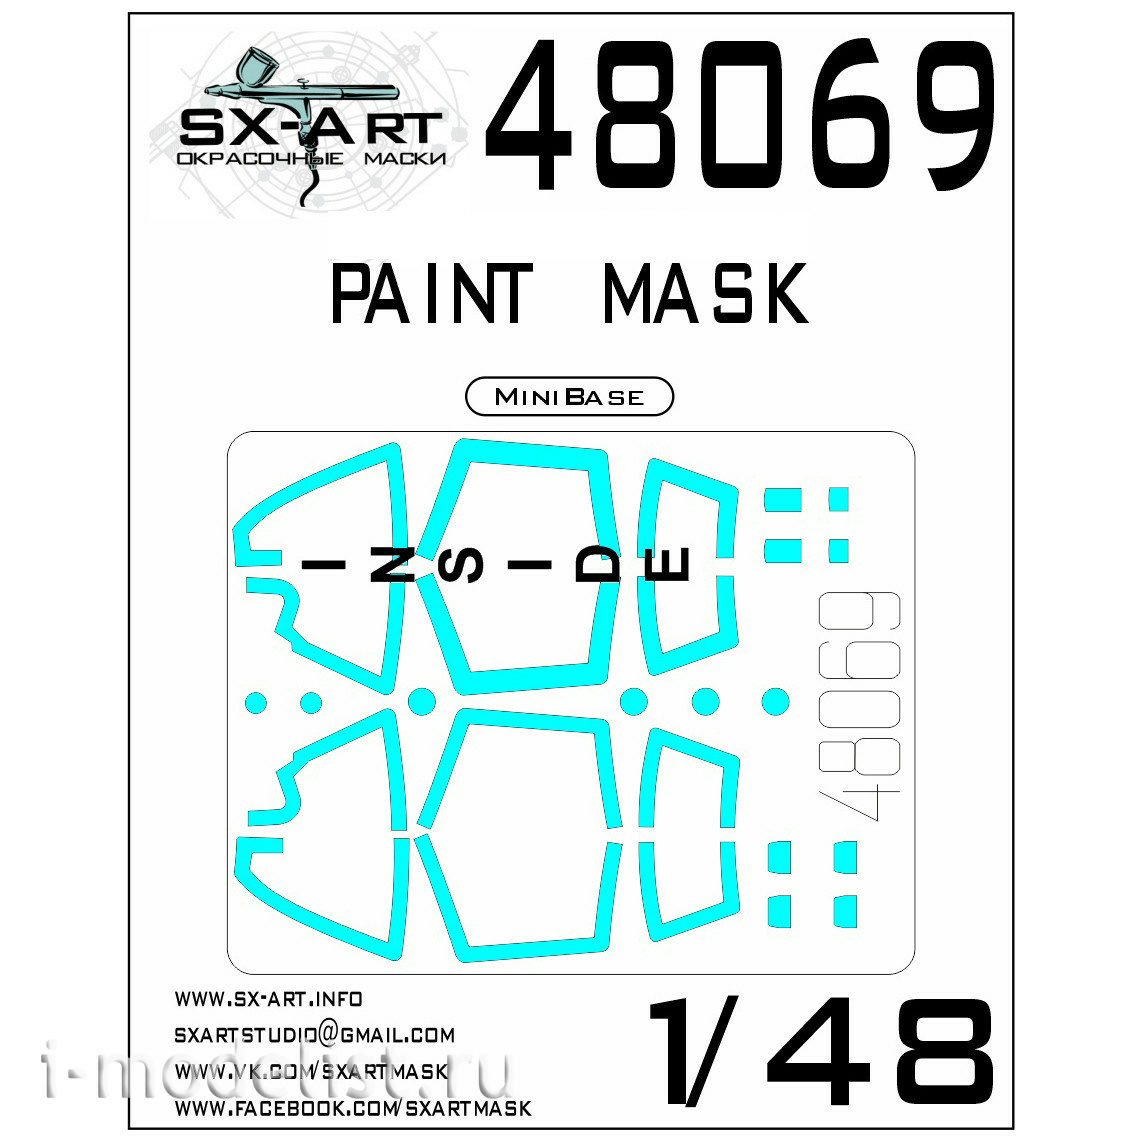 48069 SX-Art 1/48 Paint mask Si-33 (MiniBase)